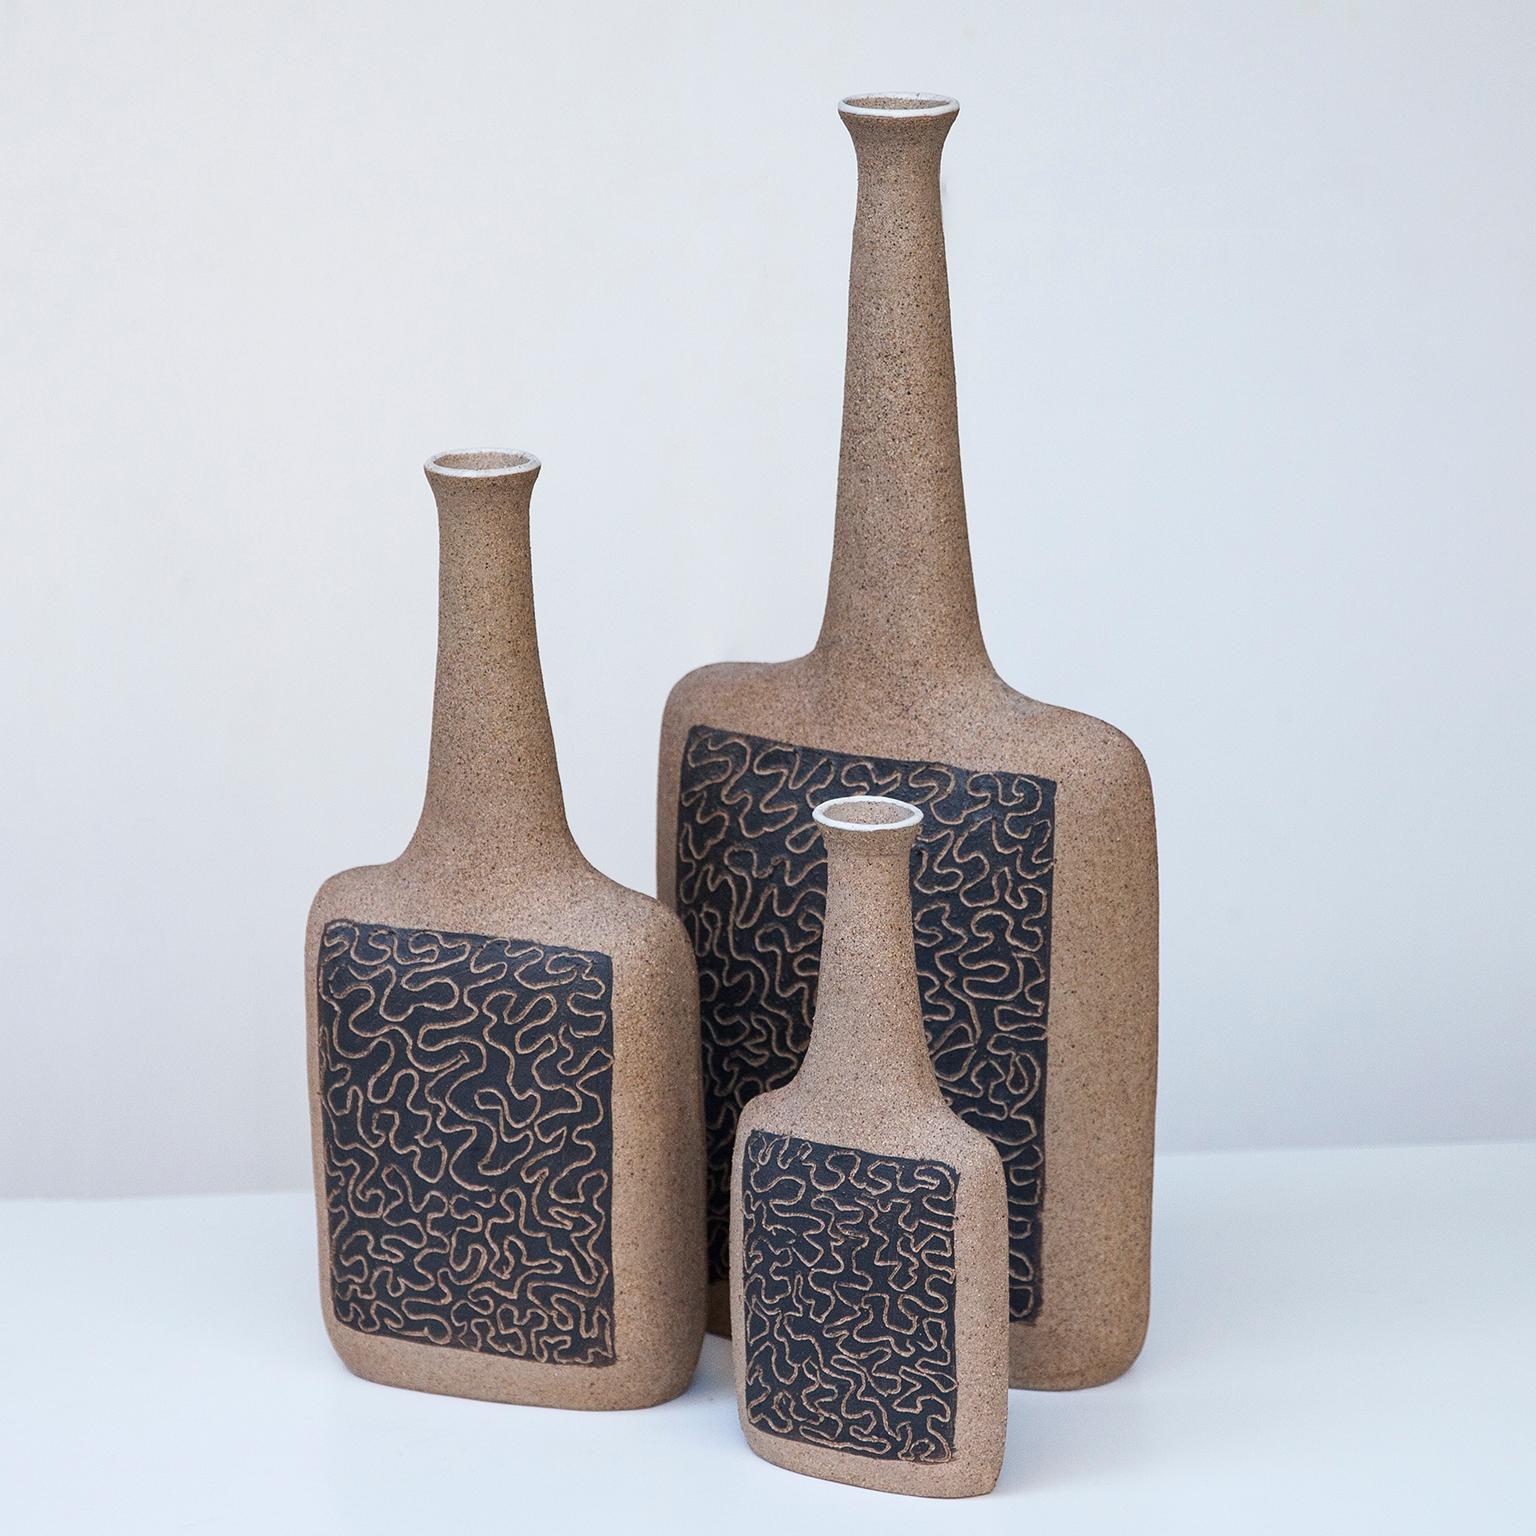 Bruno Gambone set of three stoneware vases in raw finish, Italy 1980s, signed Gambone, Italy.
The price is for the set of the 3 vases.

46 H x 20 B x 8 D cm other heights 34,5 and 24 cm.